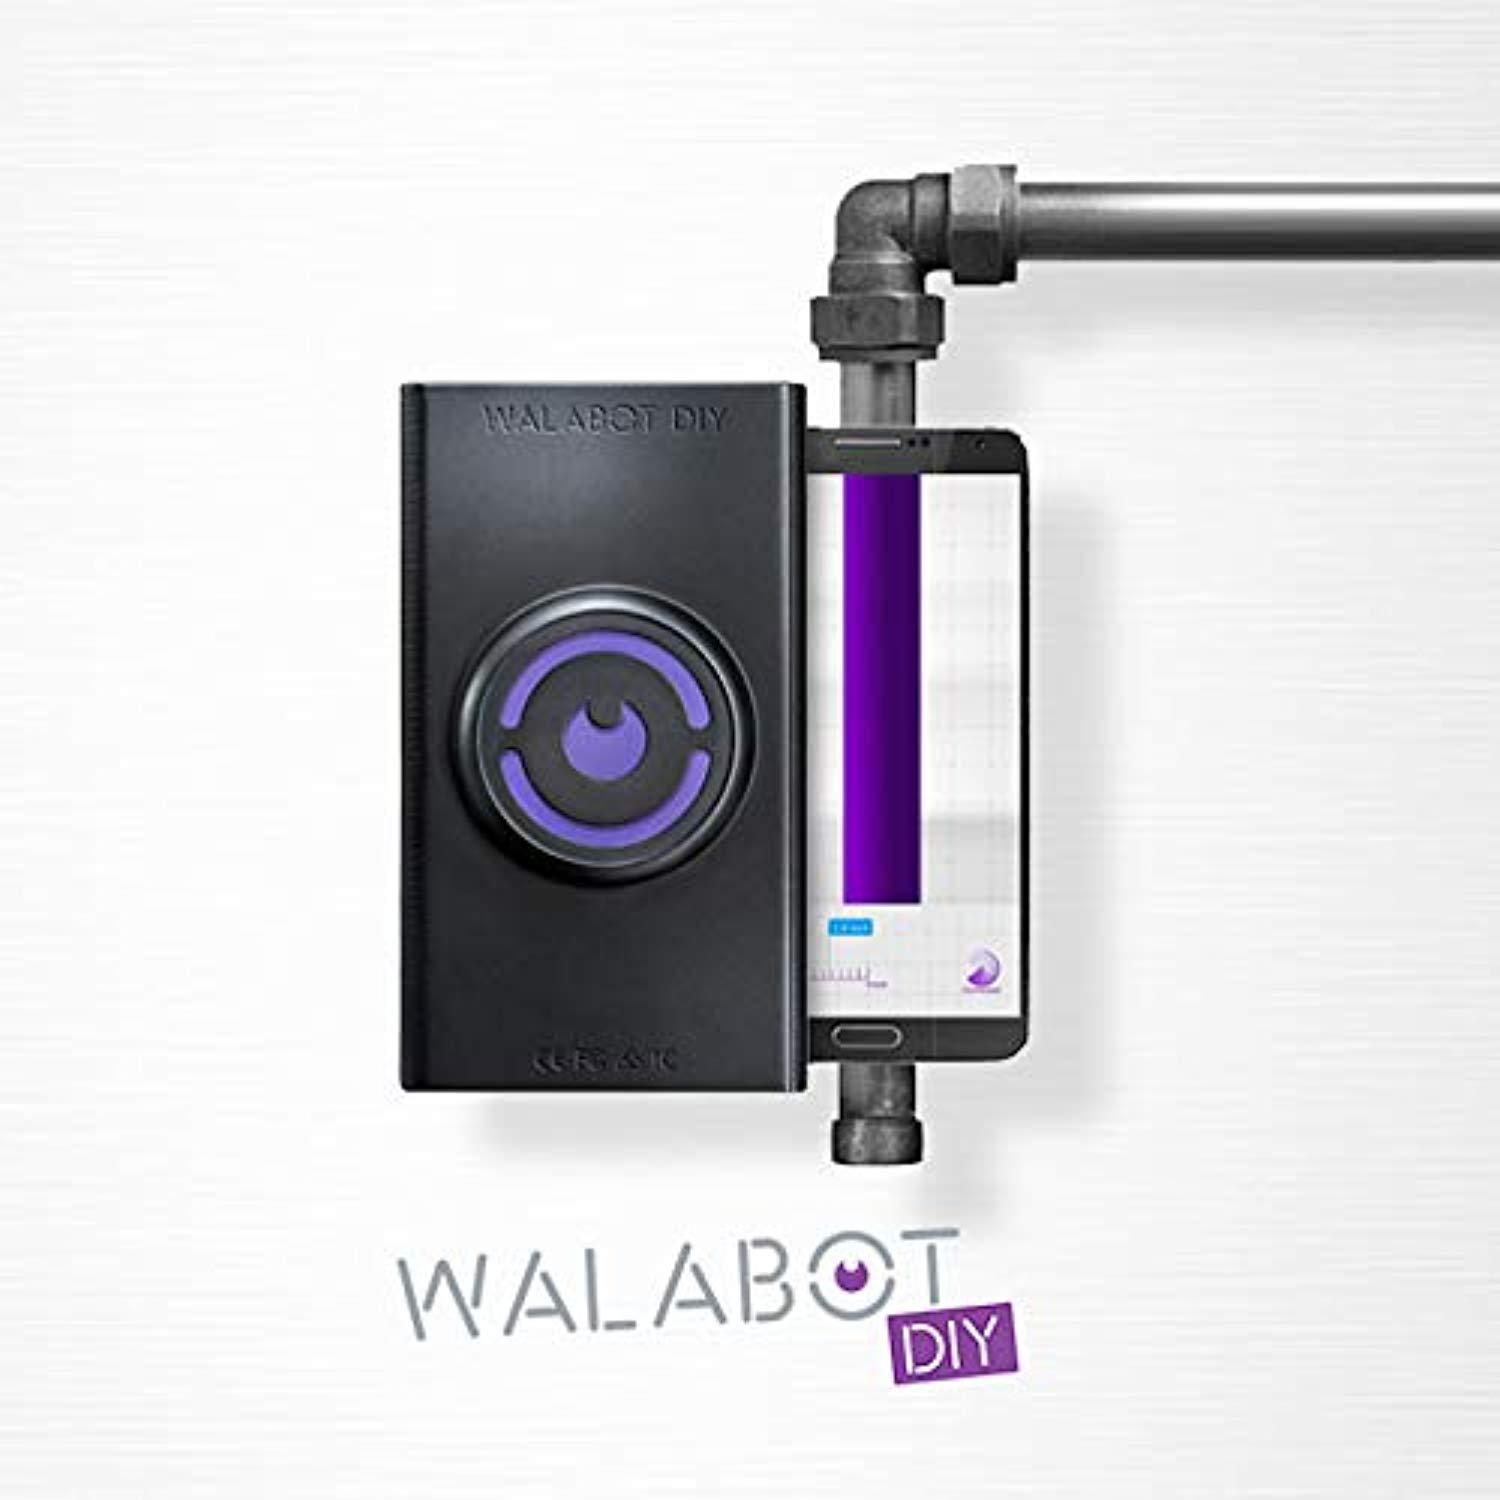 See Through the Wall with Walabot DIY –